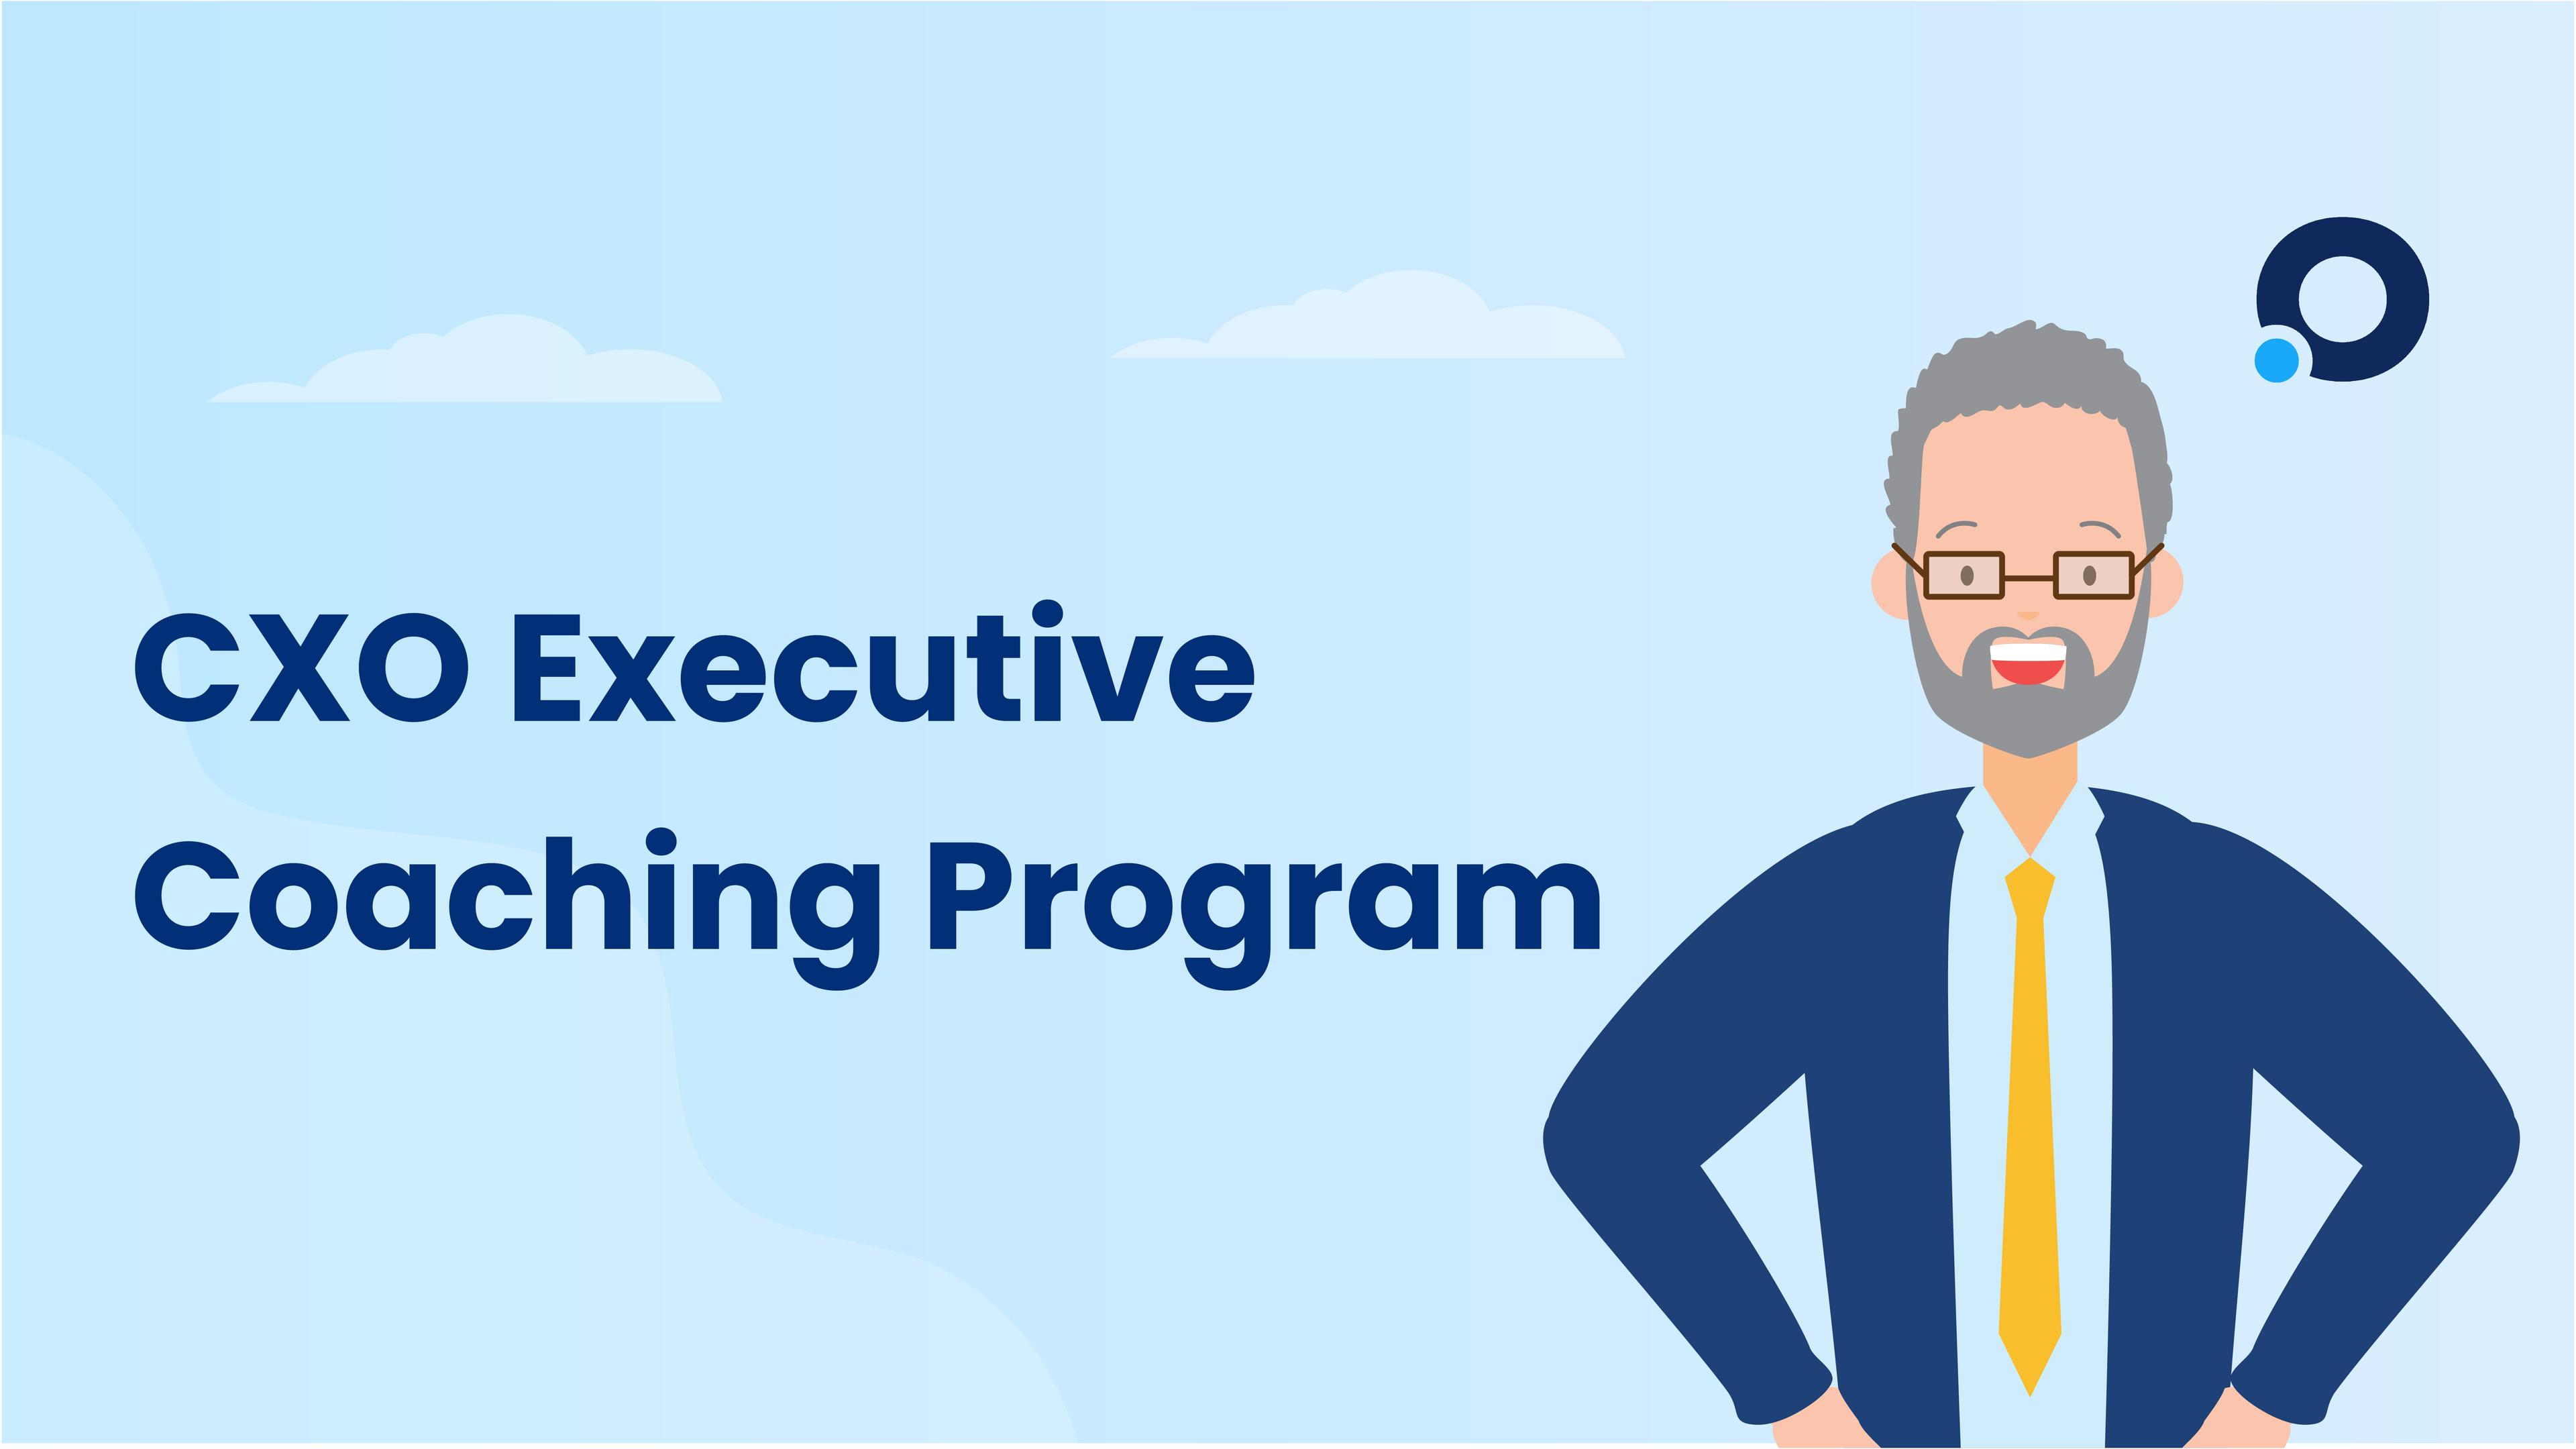 CXO Executive Coaching Program